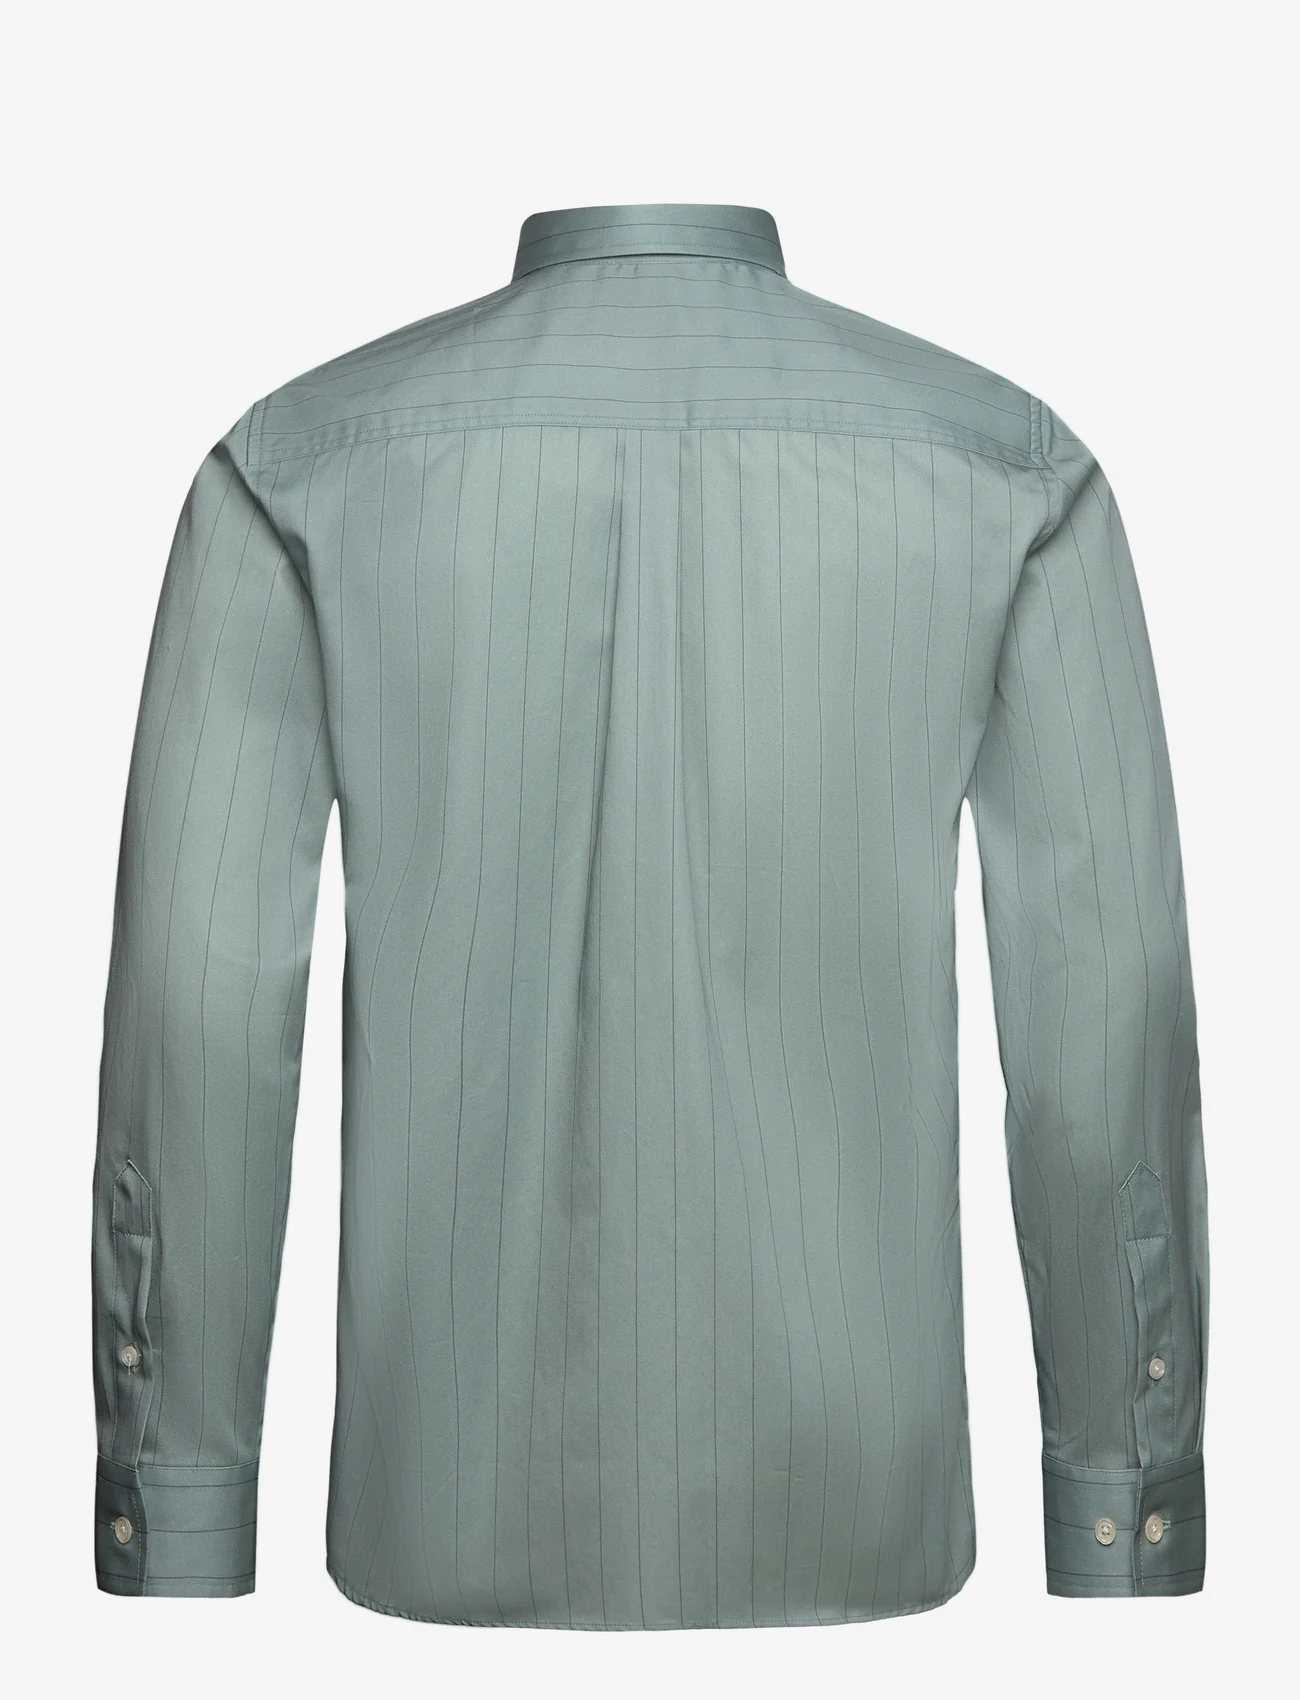 Bruuns Bazaar - SkyBBLorenzo shirt - biznesowa - sage stripe - 1